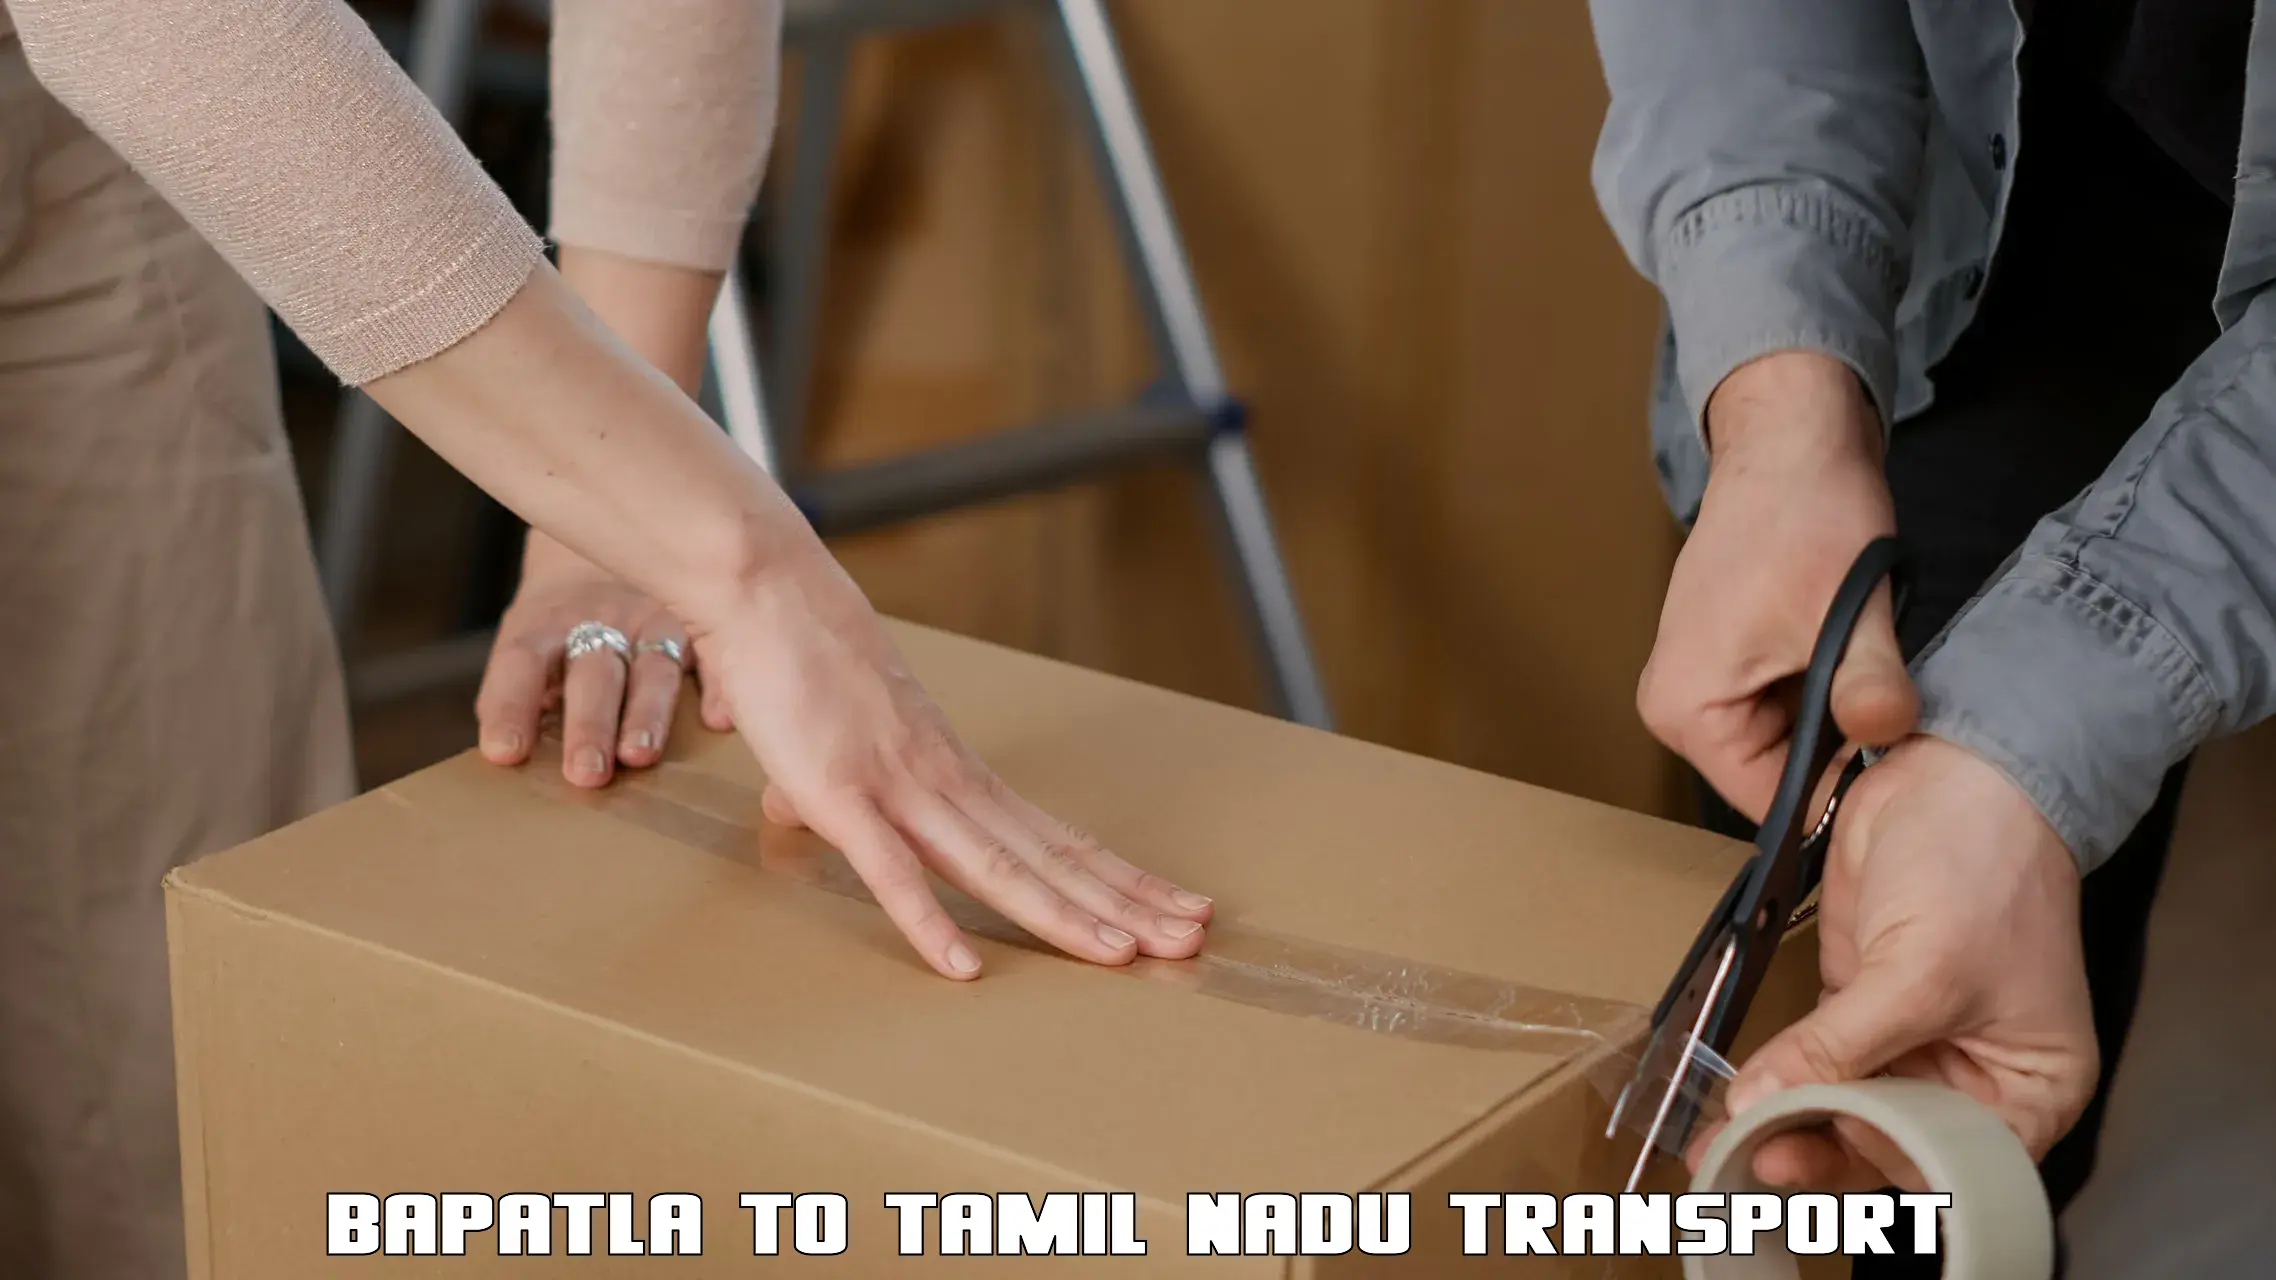 Delivery service Bapatla to Tamil Nadu